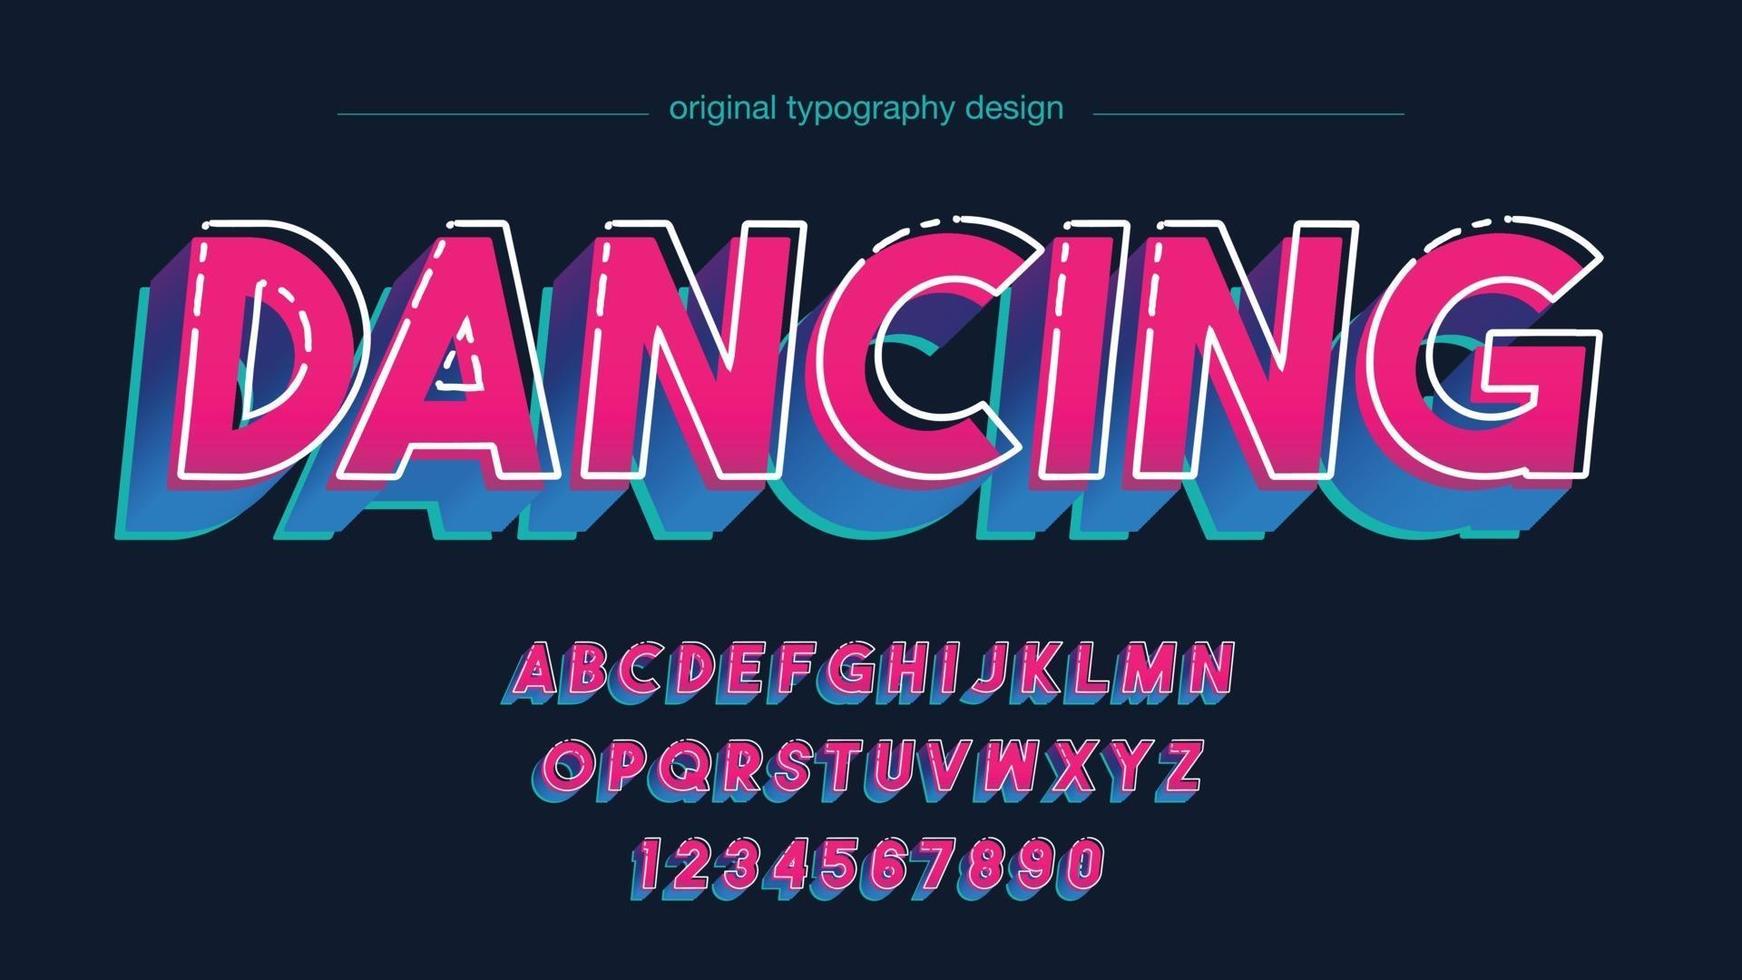 rosa och blå 3d fetstil rubrik typografi vektor